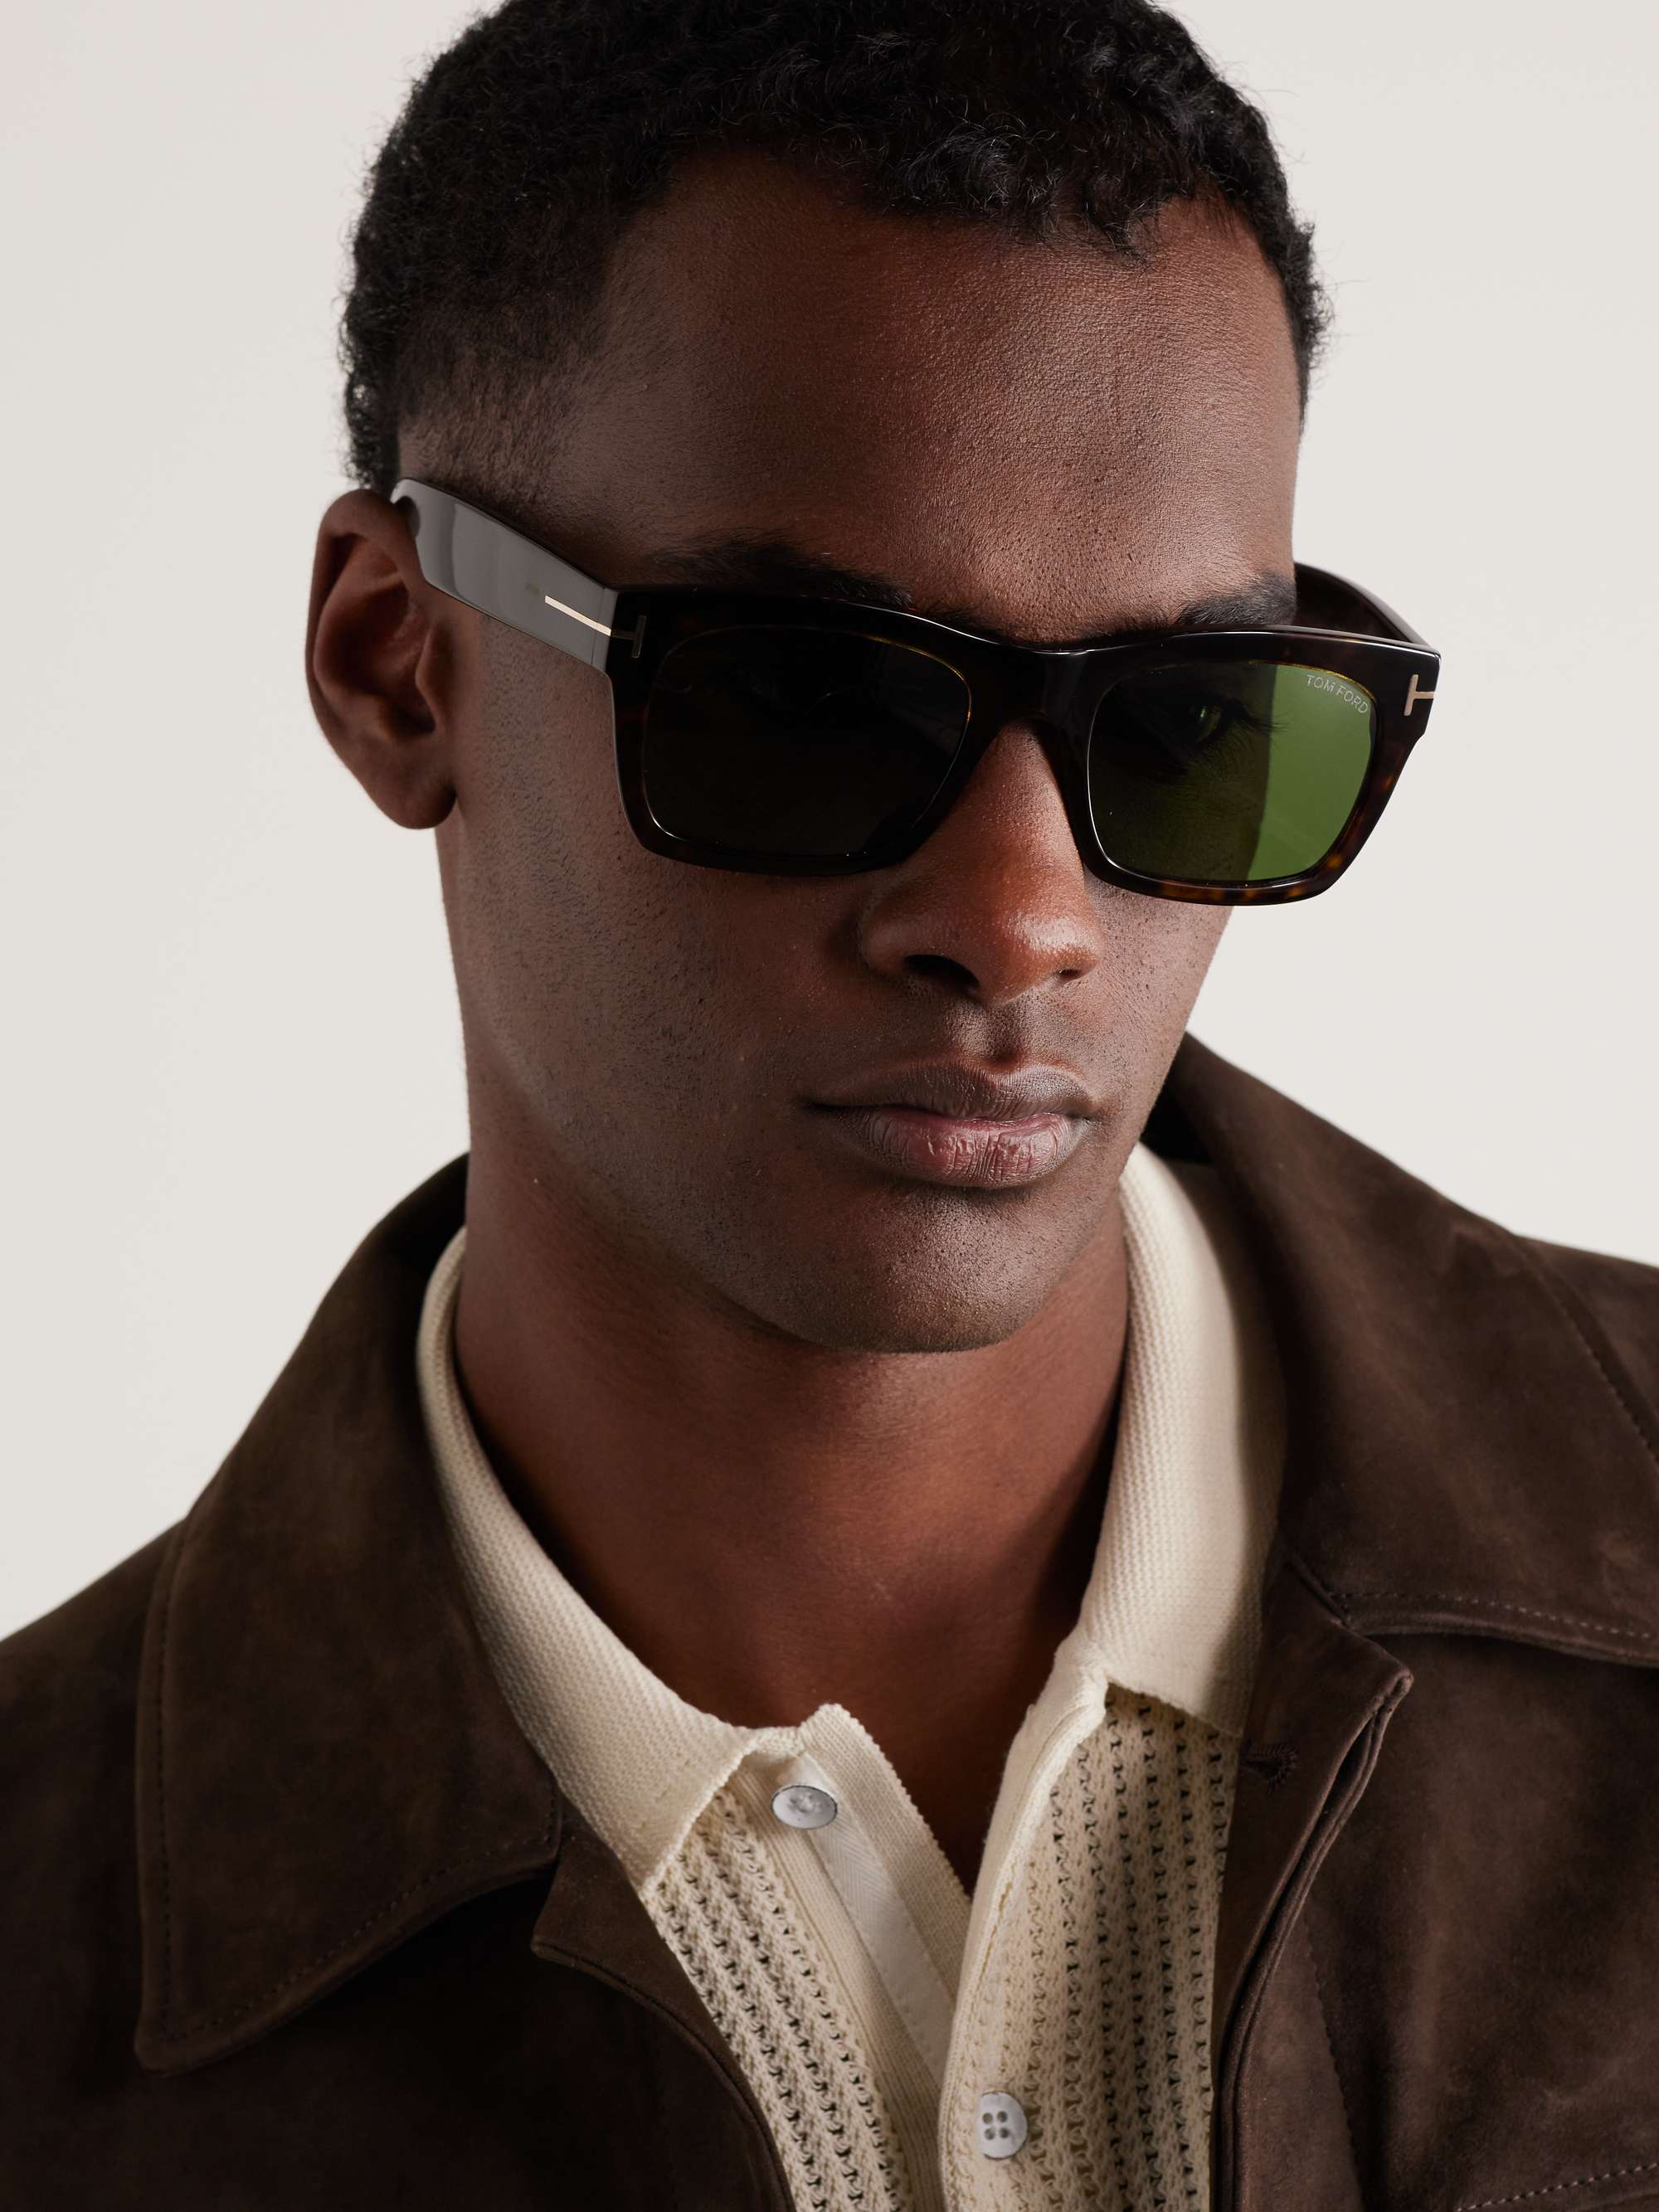 Tom Ford Eyewear Square-Frame Sunglasses